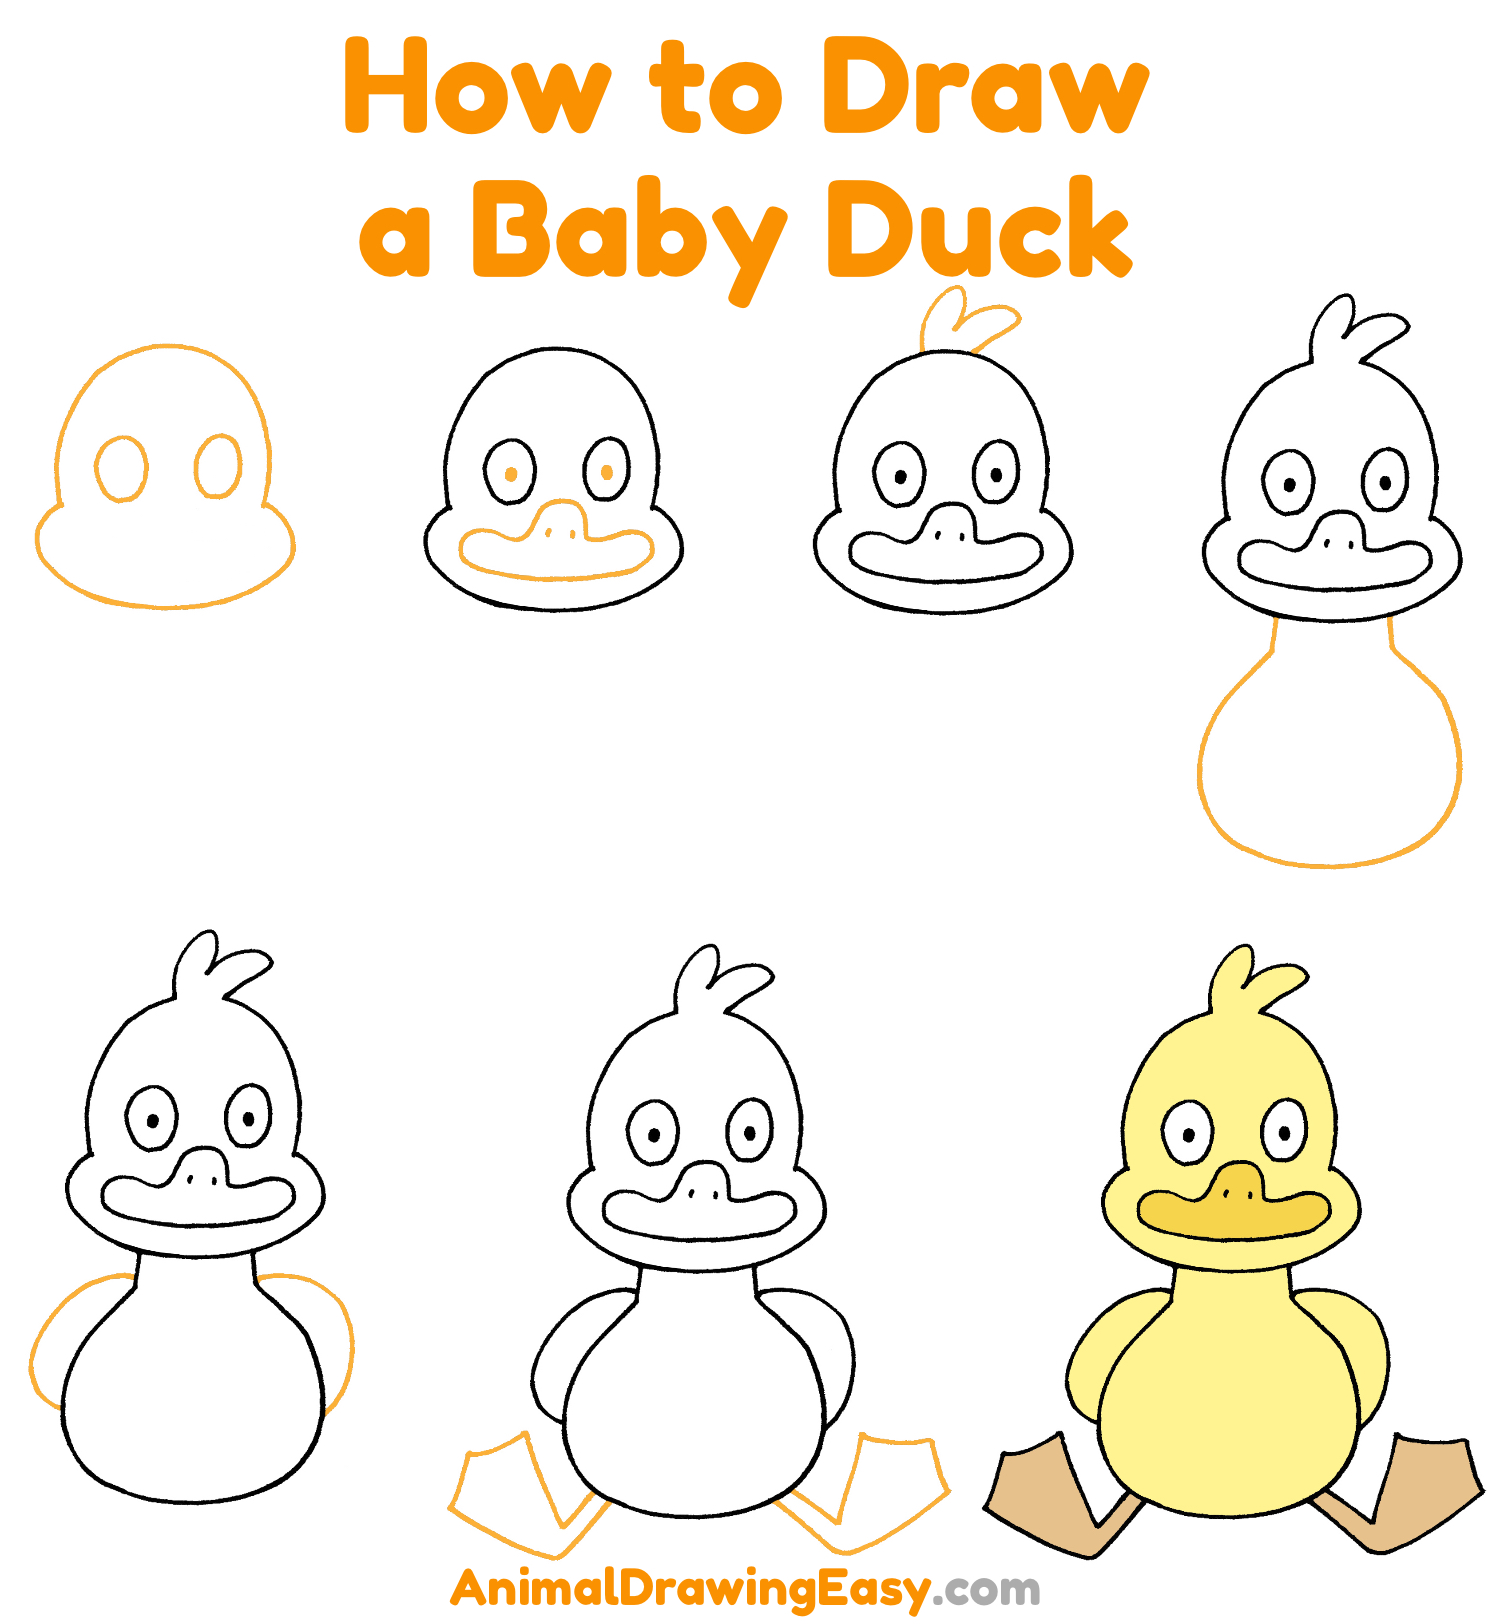 How to Draw a Baby Duck - Animaldrawingeasy.com